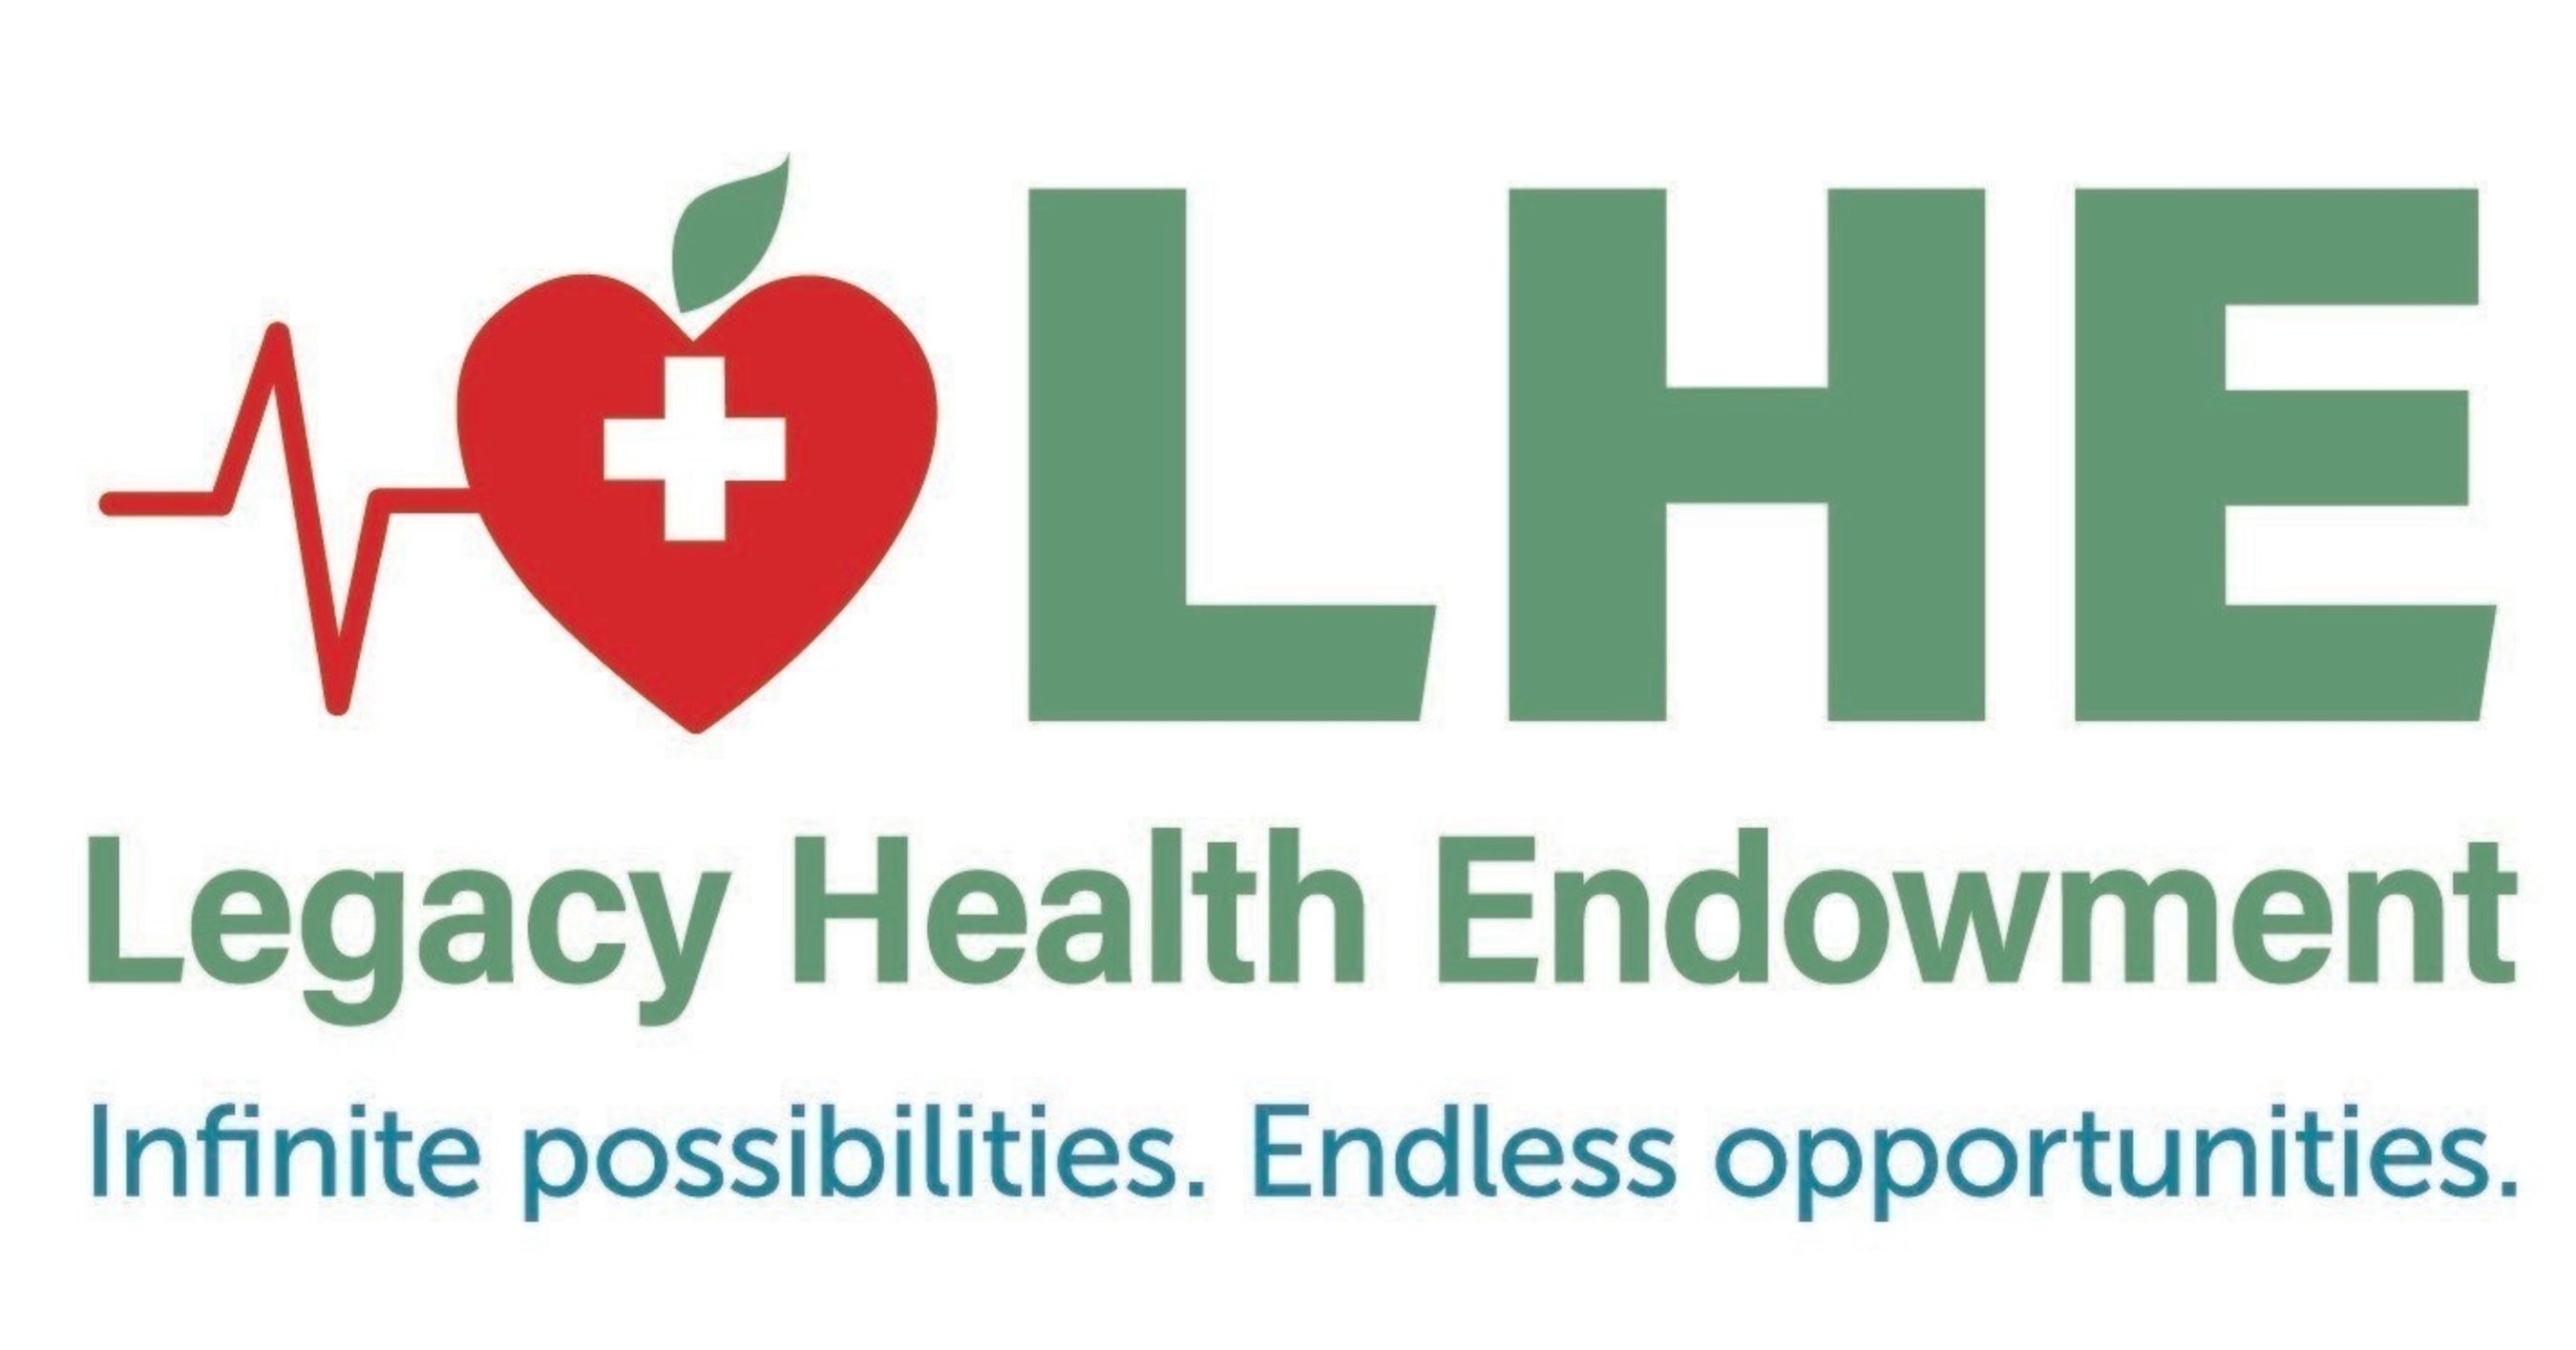 Health needs. Endowment. Health observances.